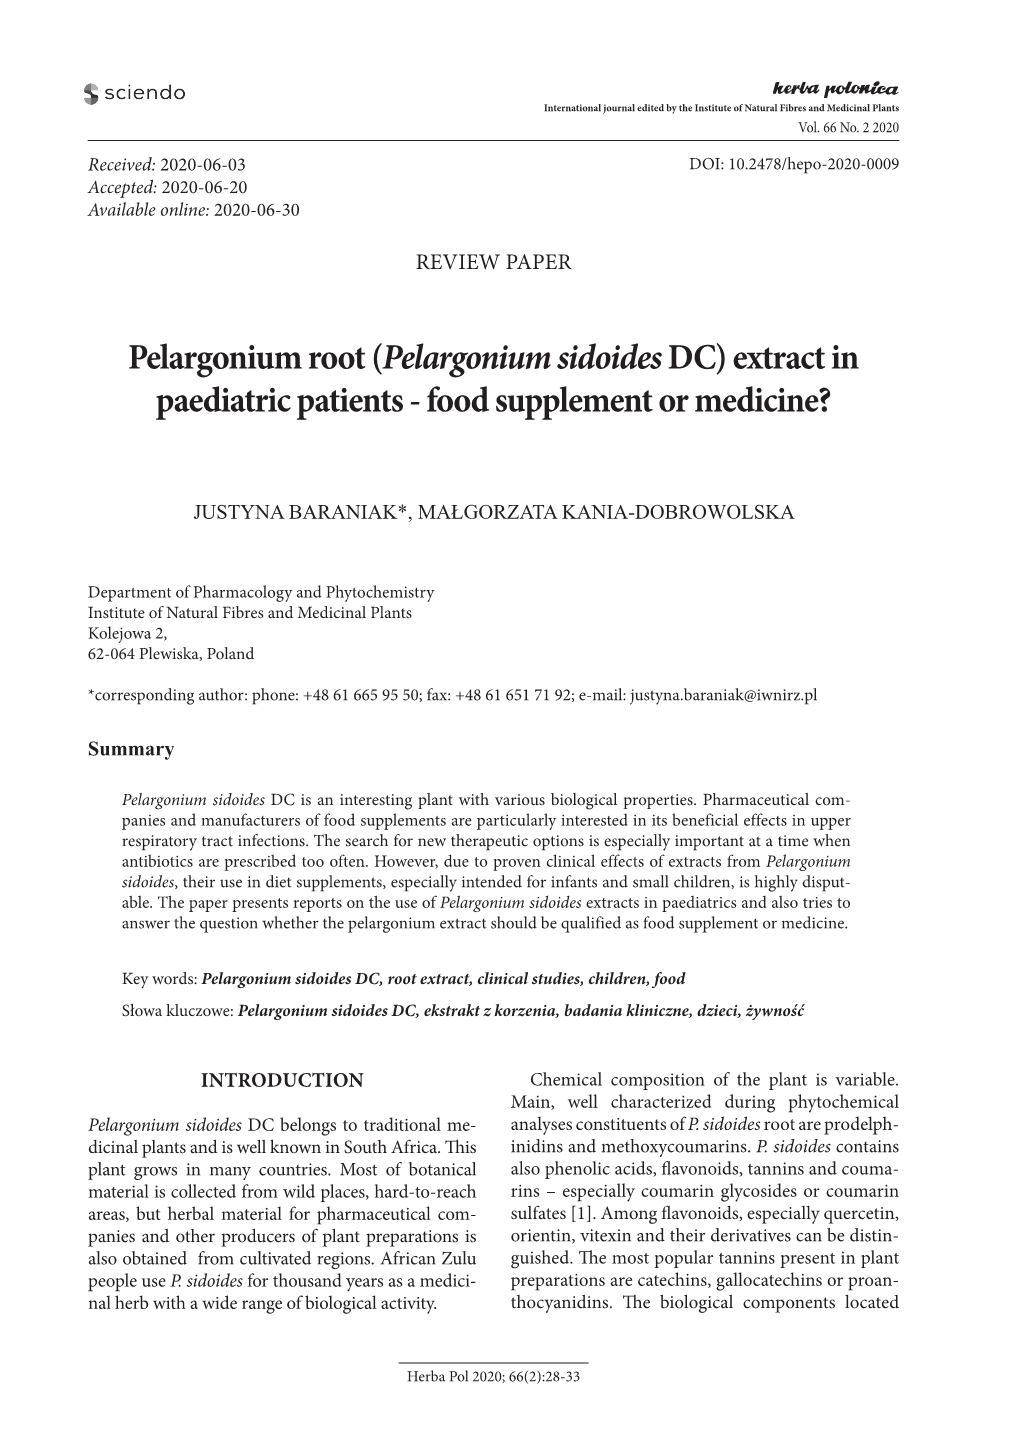 Pelargonium Sidoides DC) Extract in Paediatric Patients - Food Supplement Or Medicine?